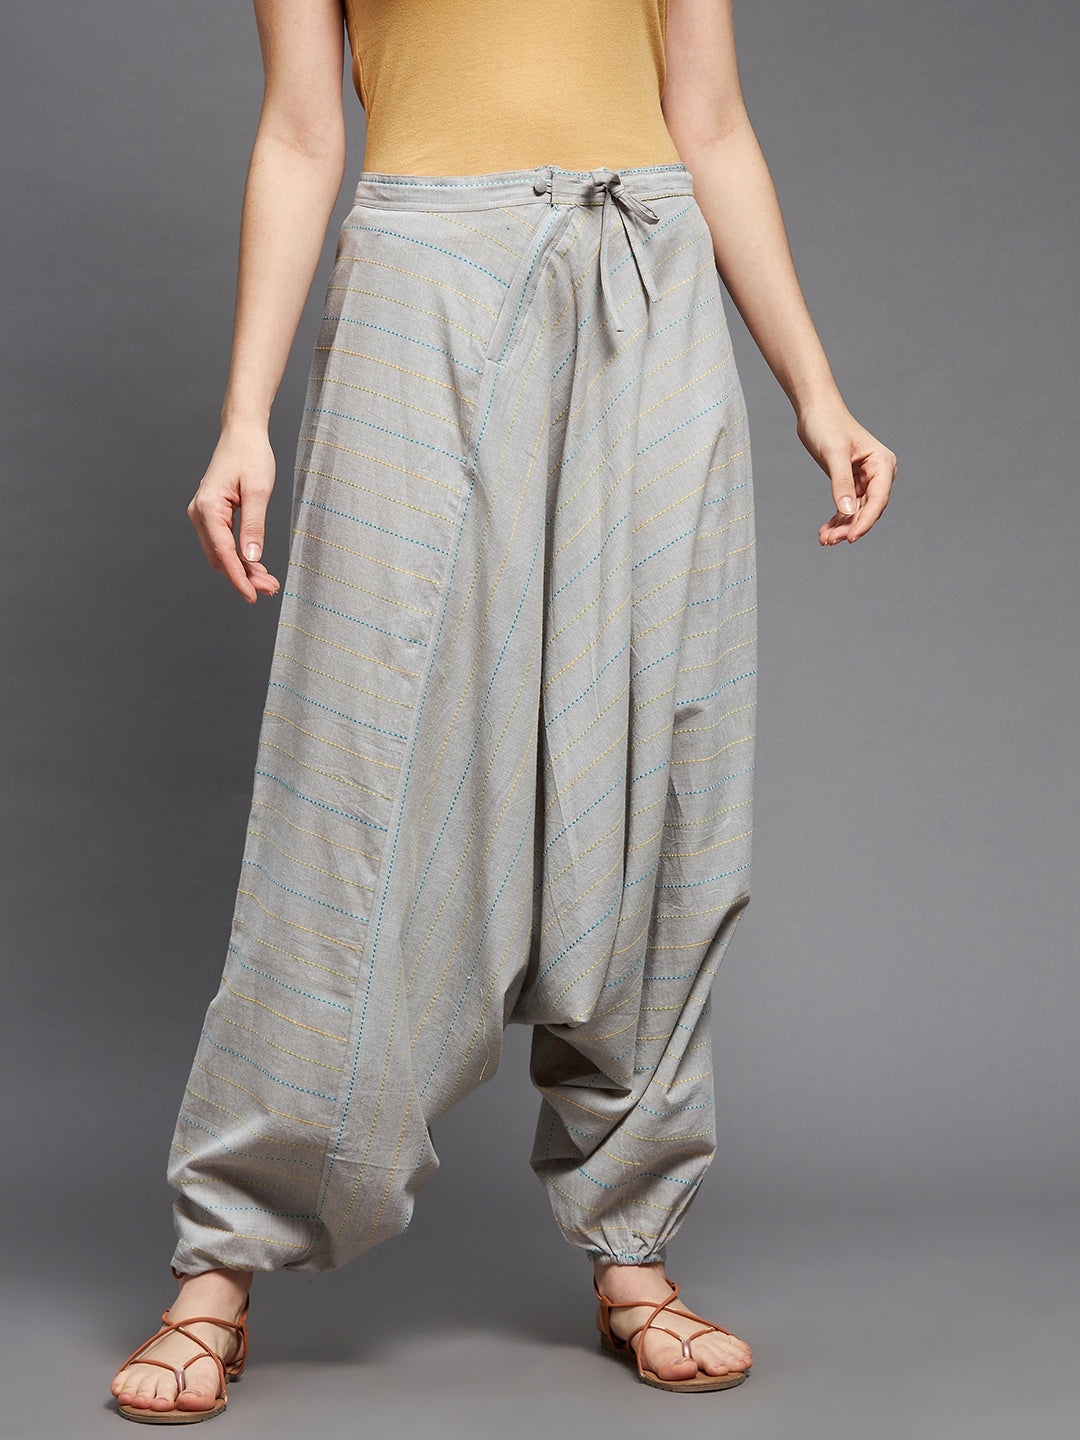 Harem Pants for Women & Men in Charcoal / Super Soft Cotton / Lounge Pants  - Etsy | Cotton lounge pants, Harem pants women, Pants for women